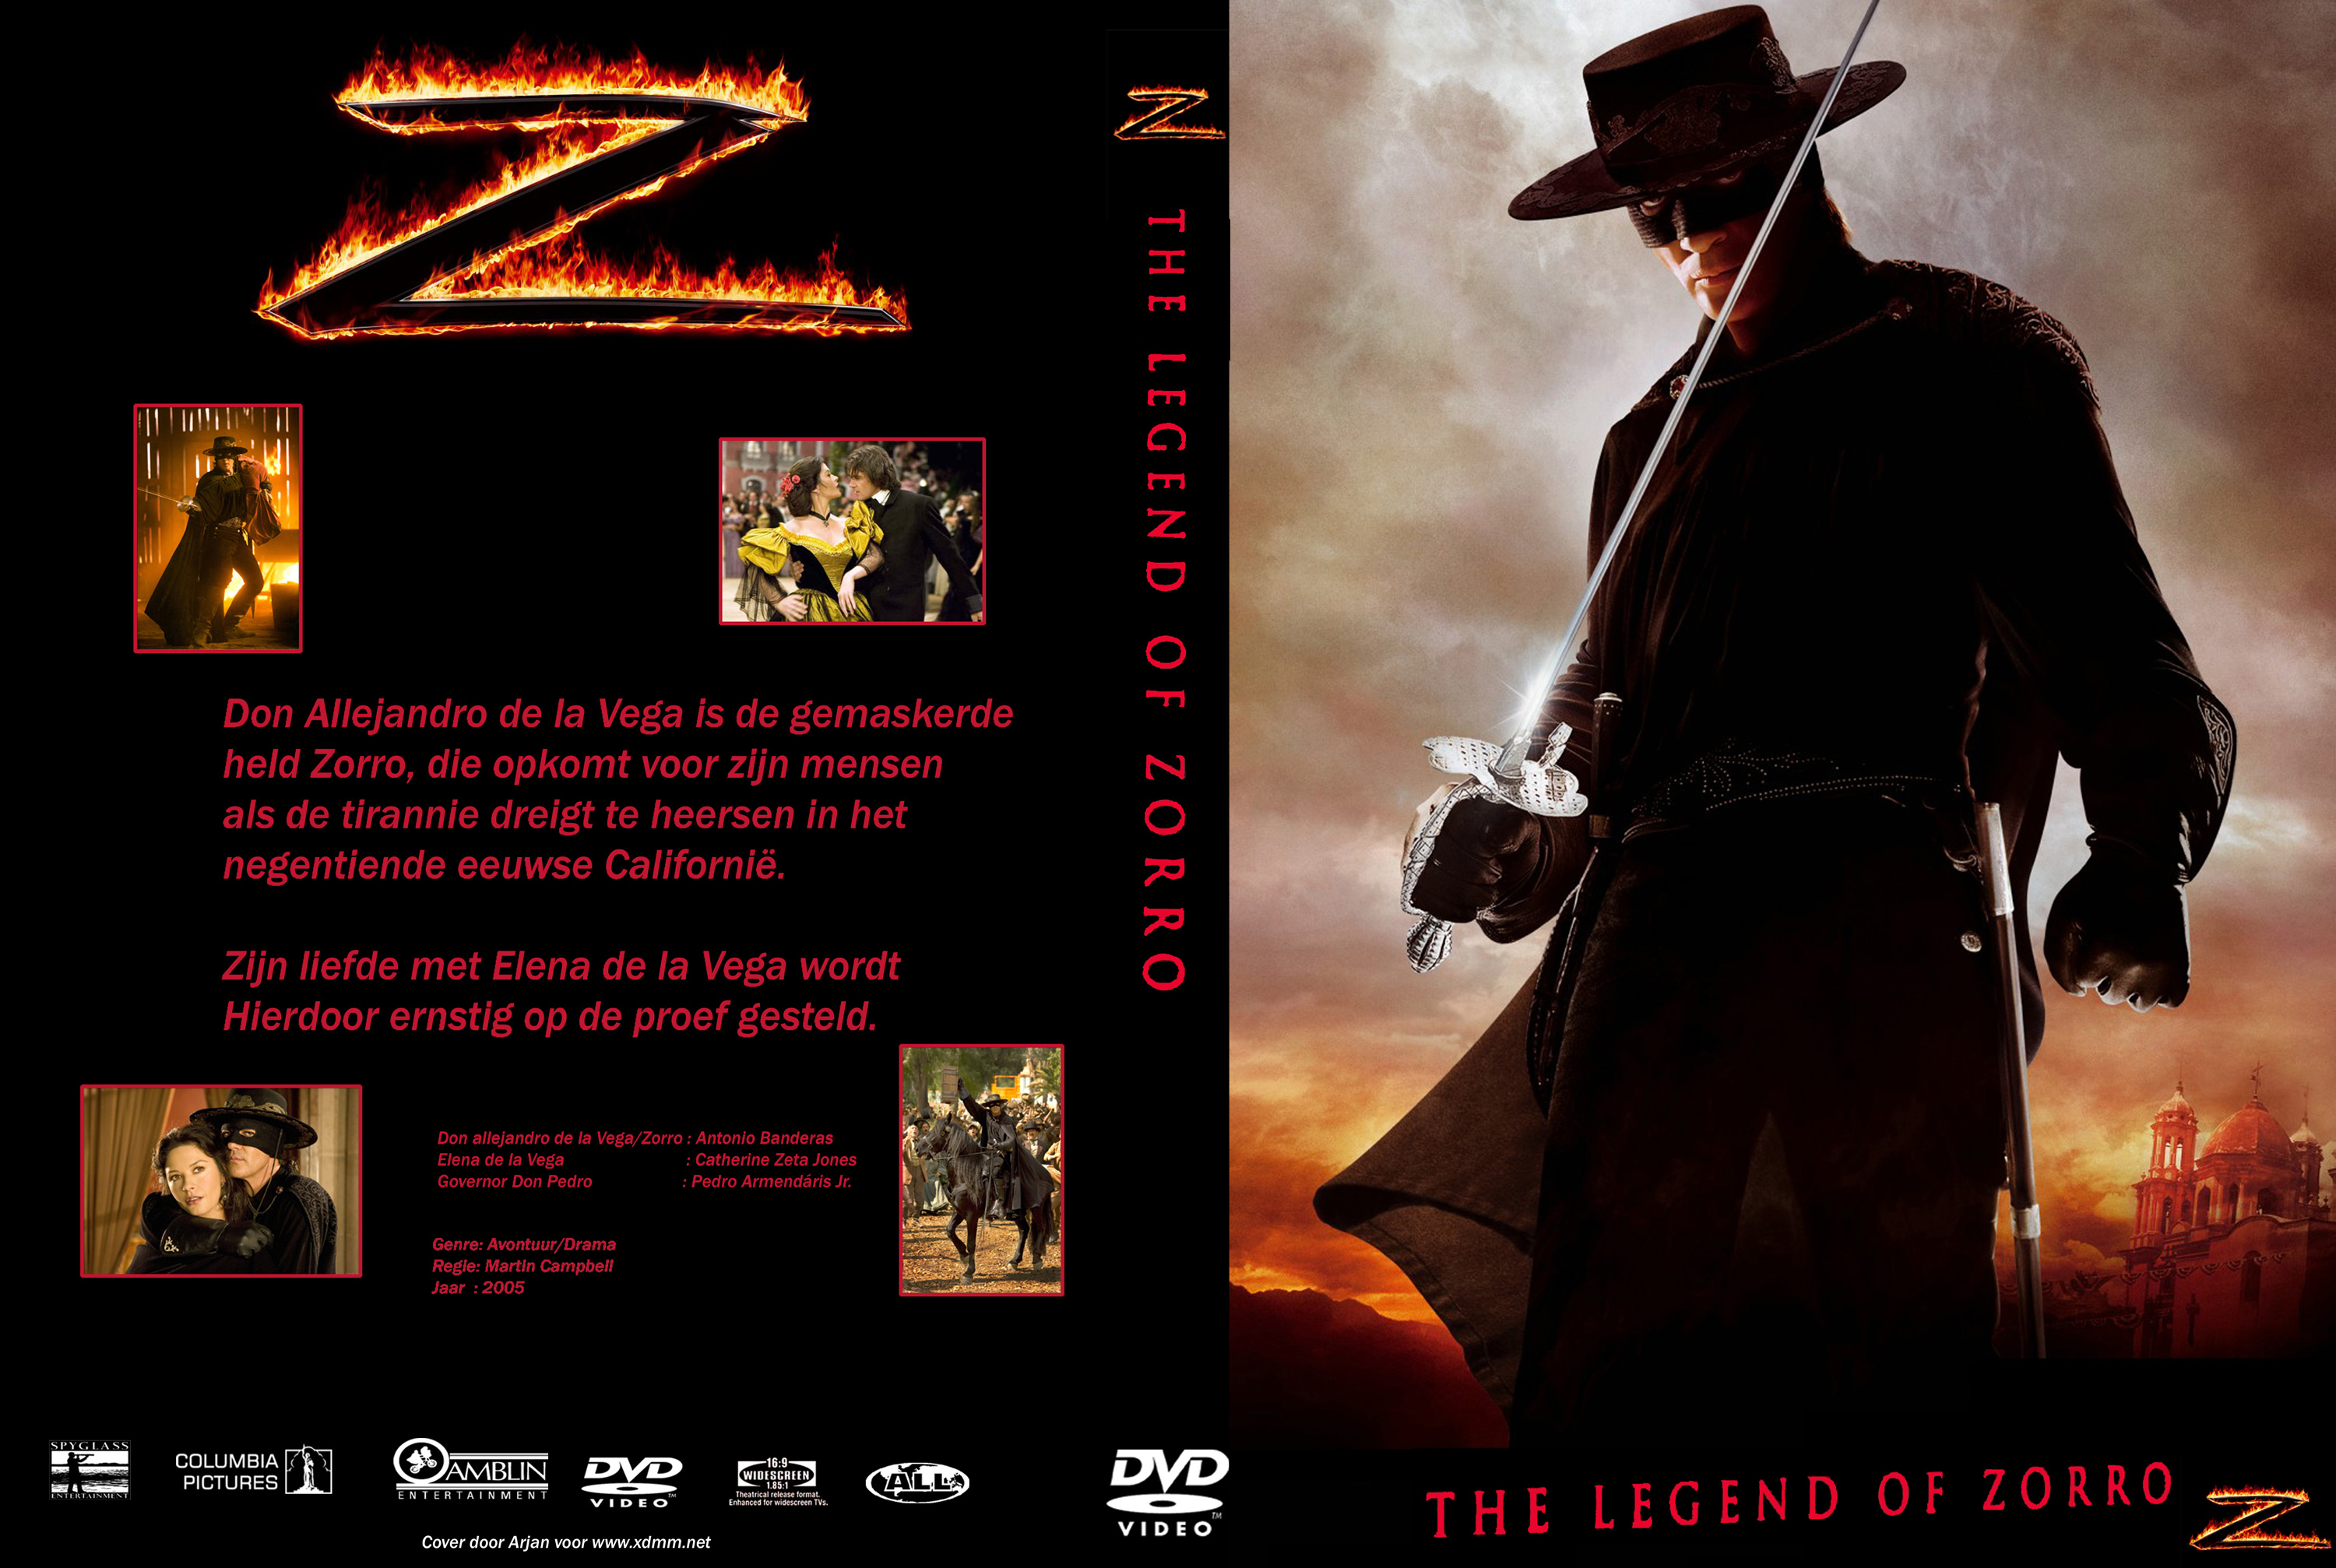 Legend Of Zorro